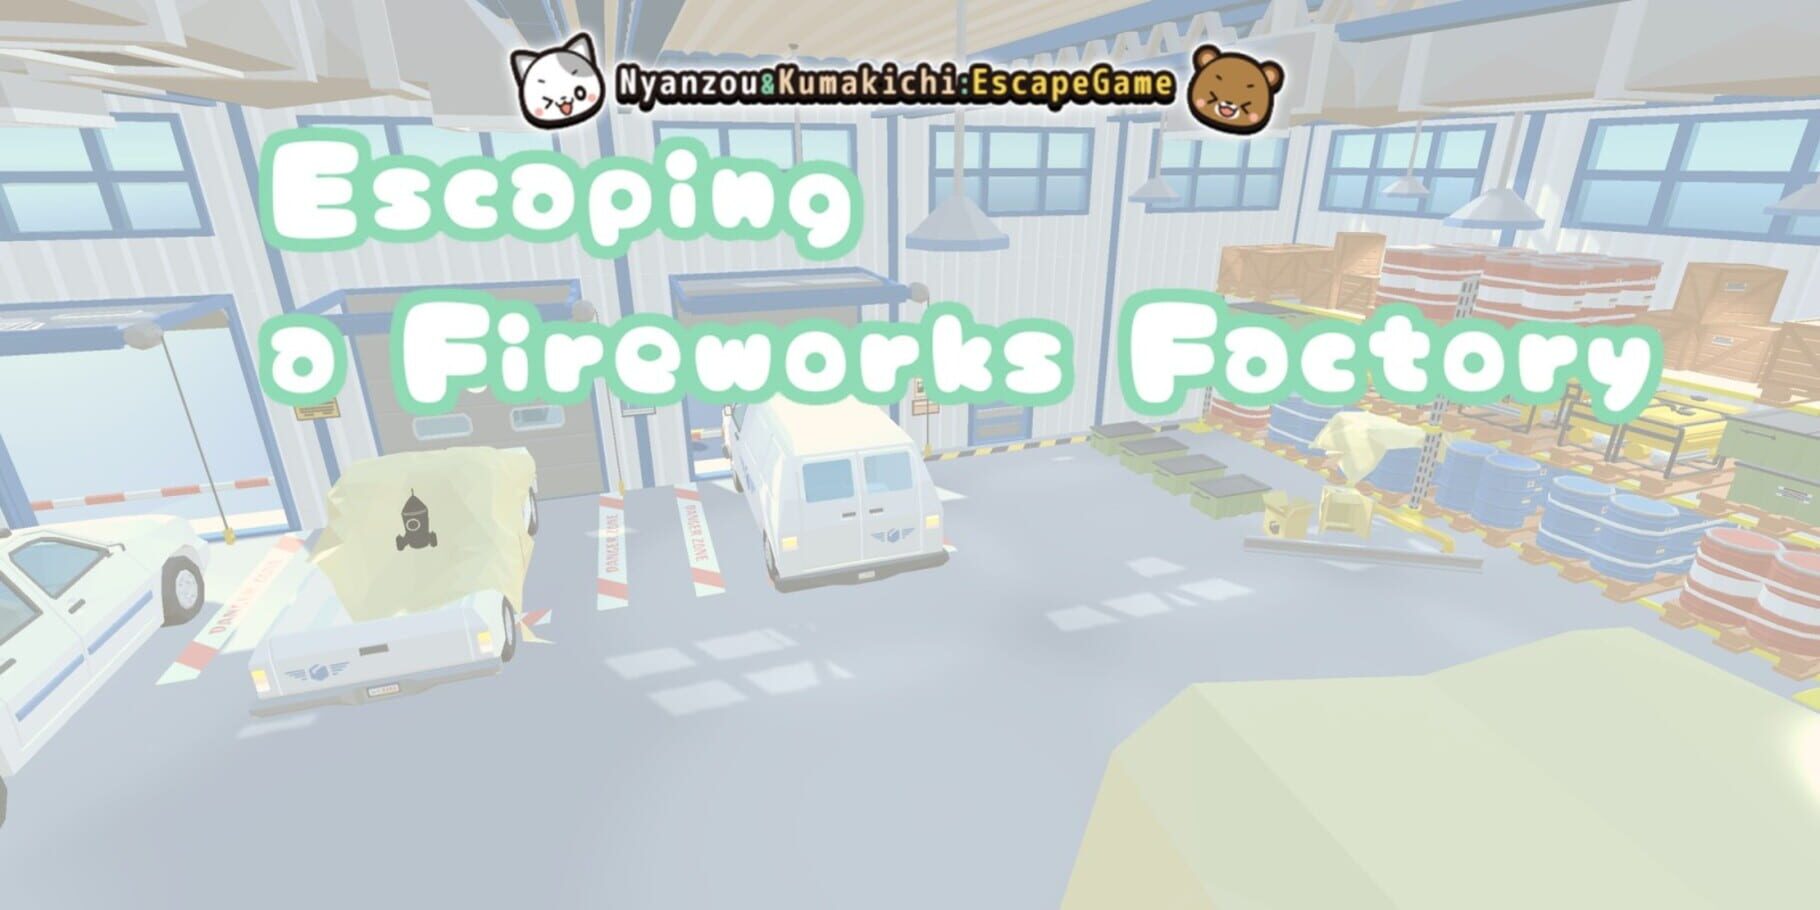 Escaping a Fireworks Factory: Nyanzou & Kumakichi - Escape Game artwork